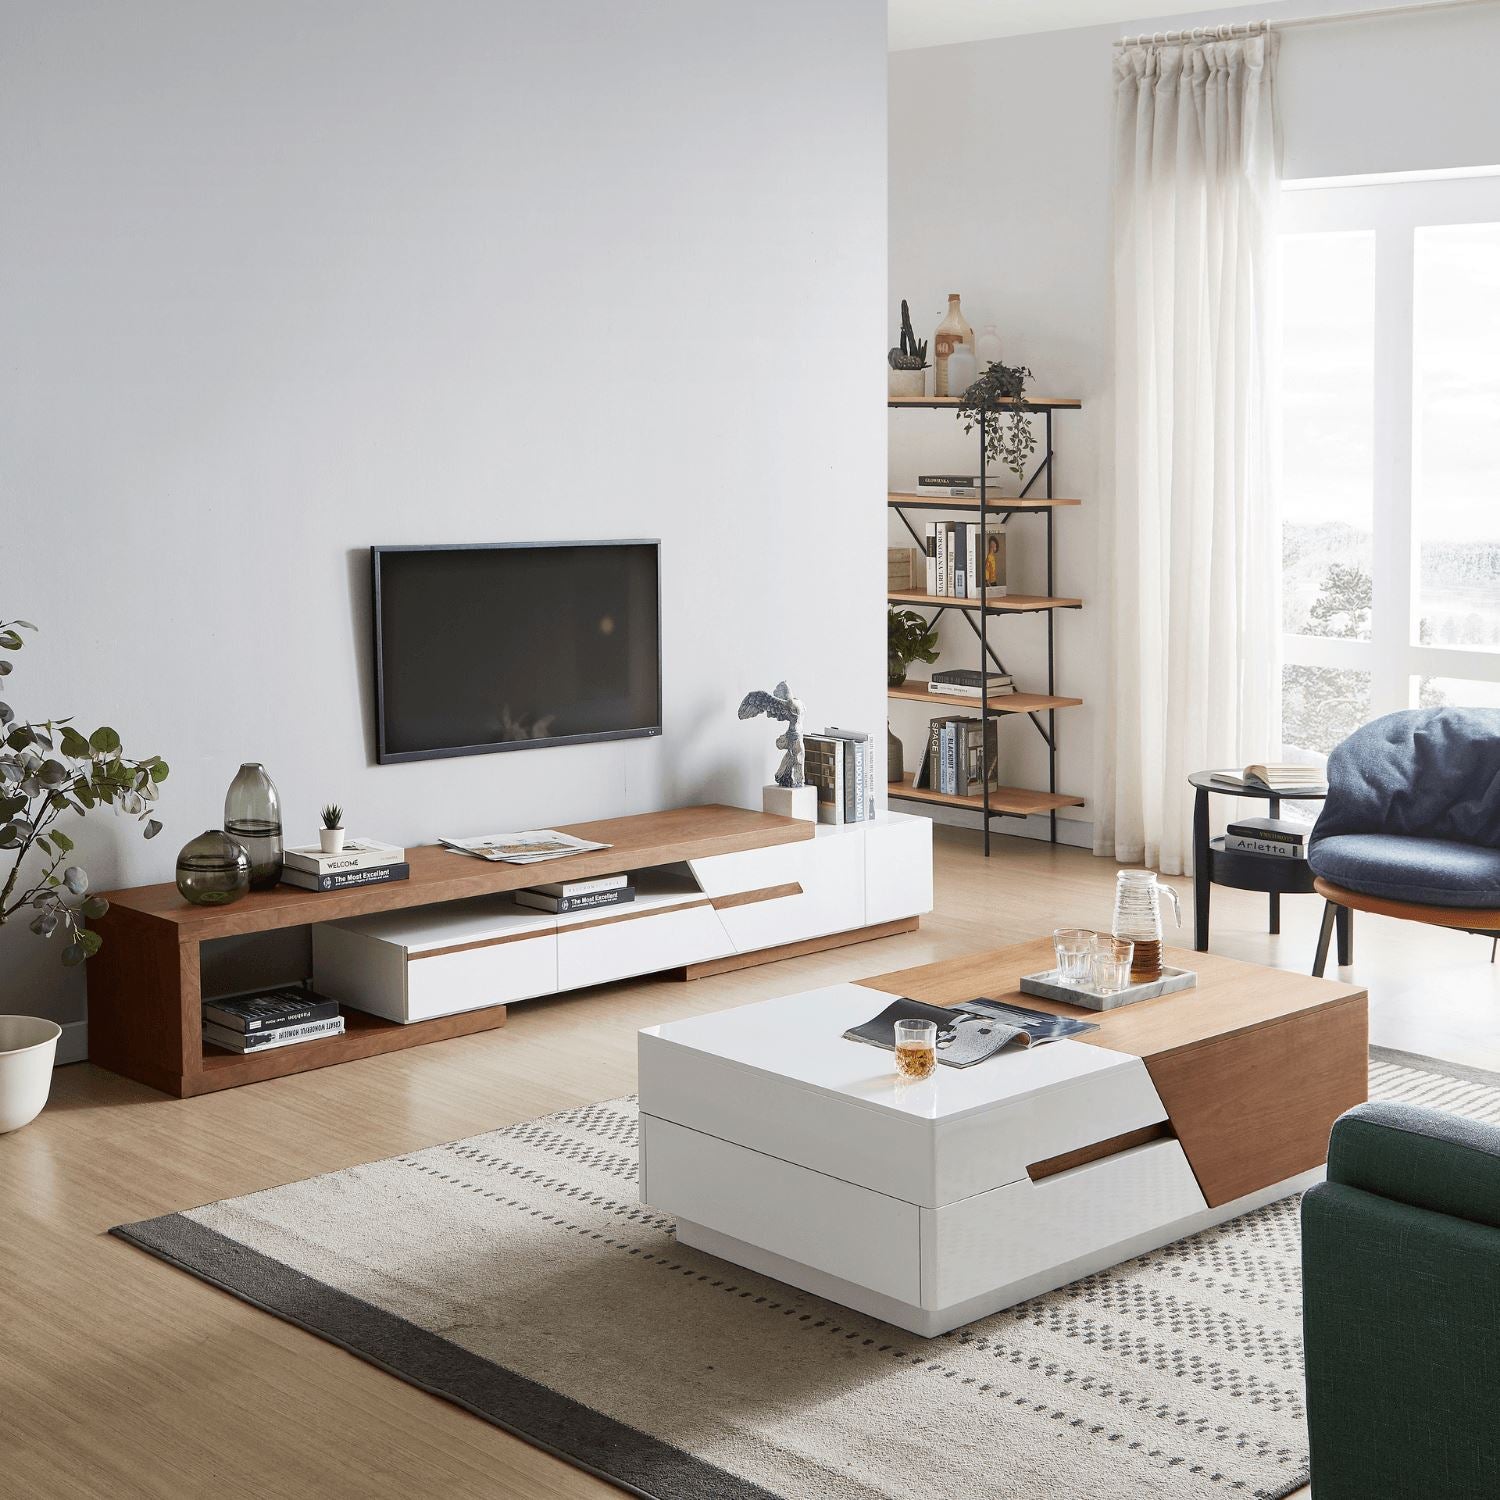 Lanordic Living Room Set - Valyou 